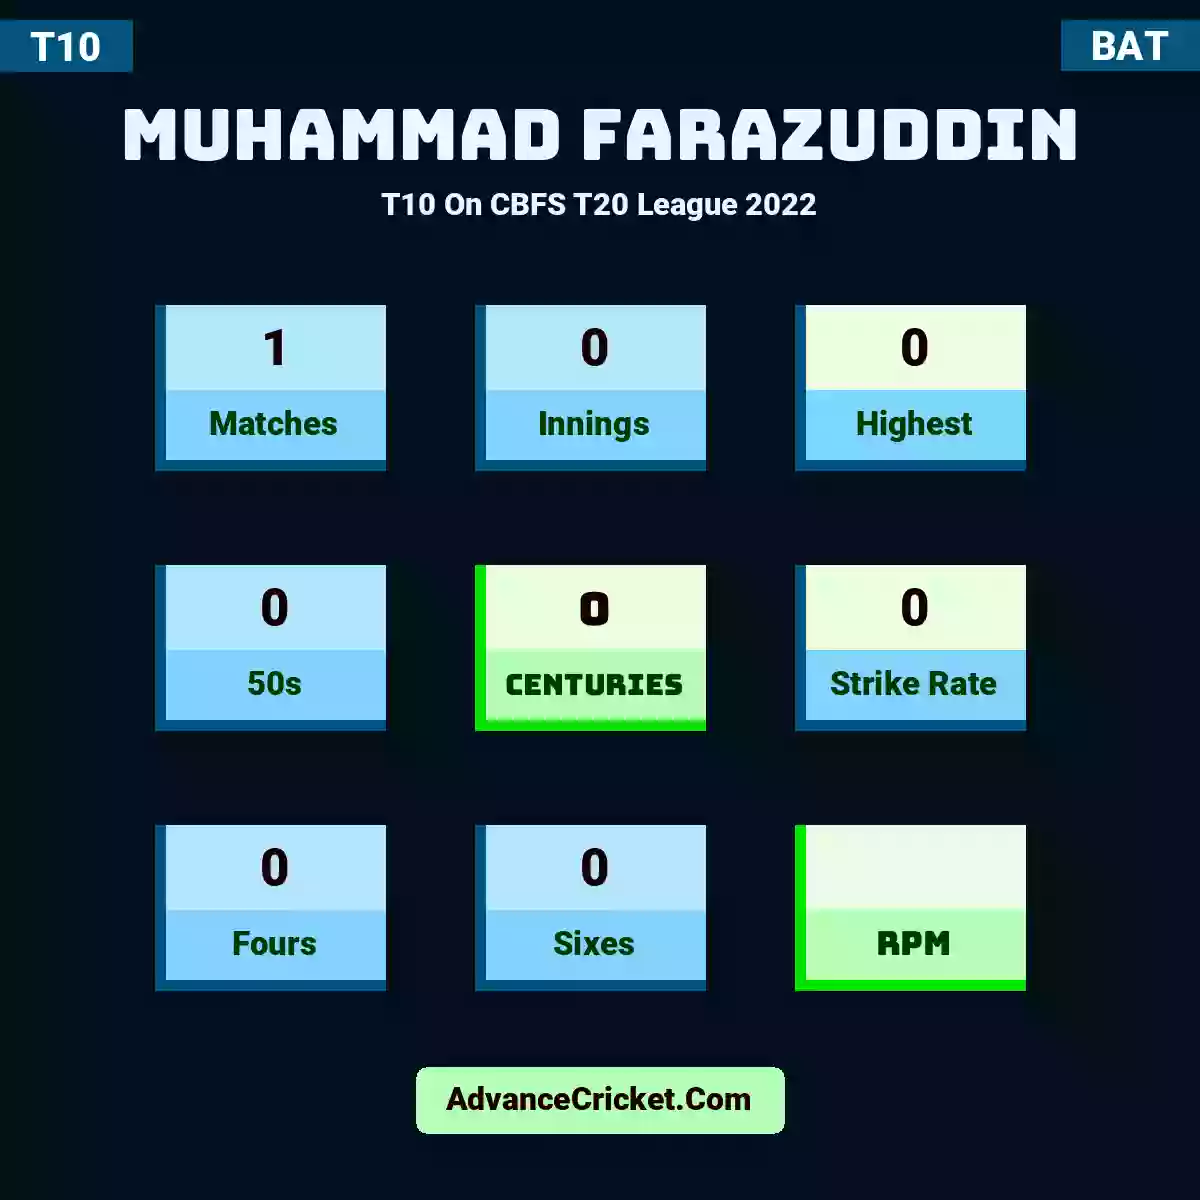 Muhammad Farazuddin T10  On CBFS T20 League 2022, Muhammad Farazuddin played 1 matches, scored 0 runs as highest, 0 half-centuries, and 0 centuries, with a strike rate of 0. M.Farazuddin hit 0 fours and 0 sixes.